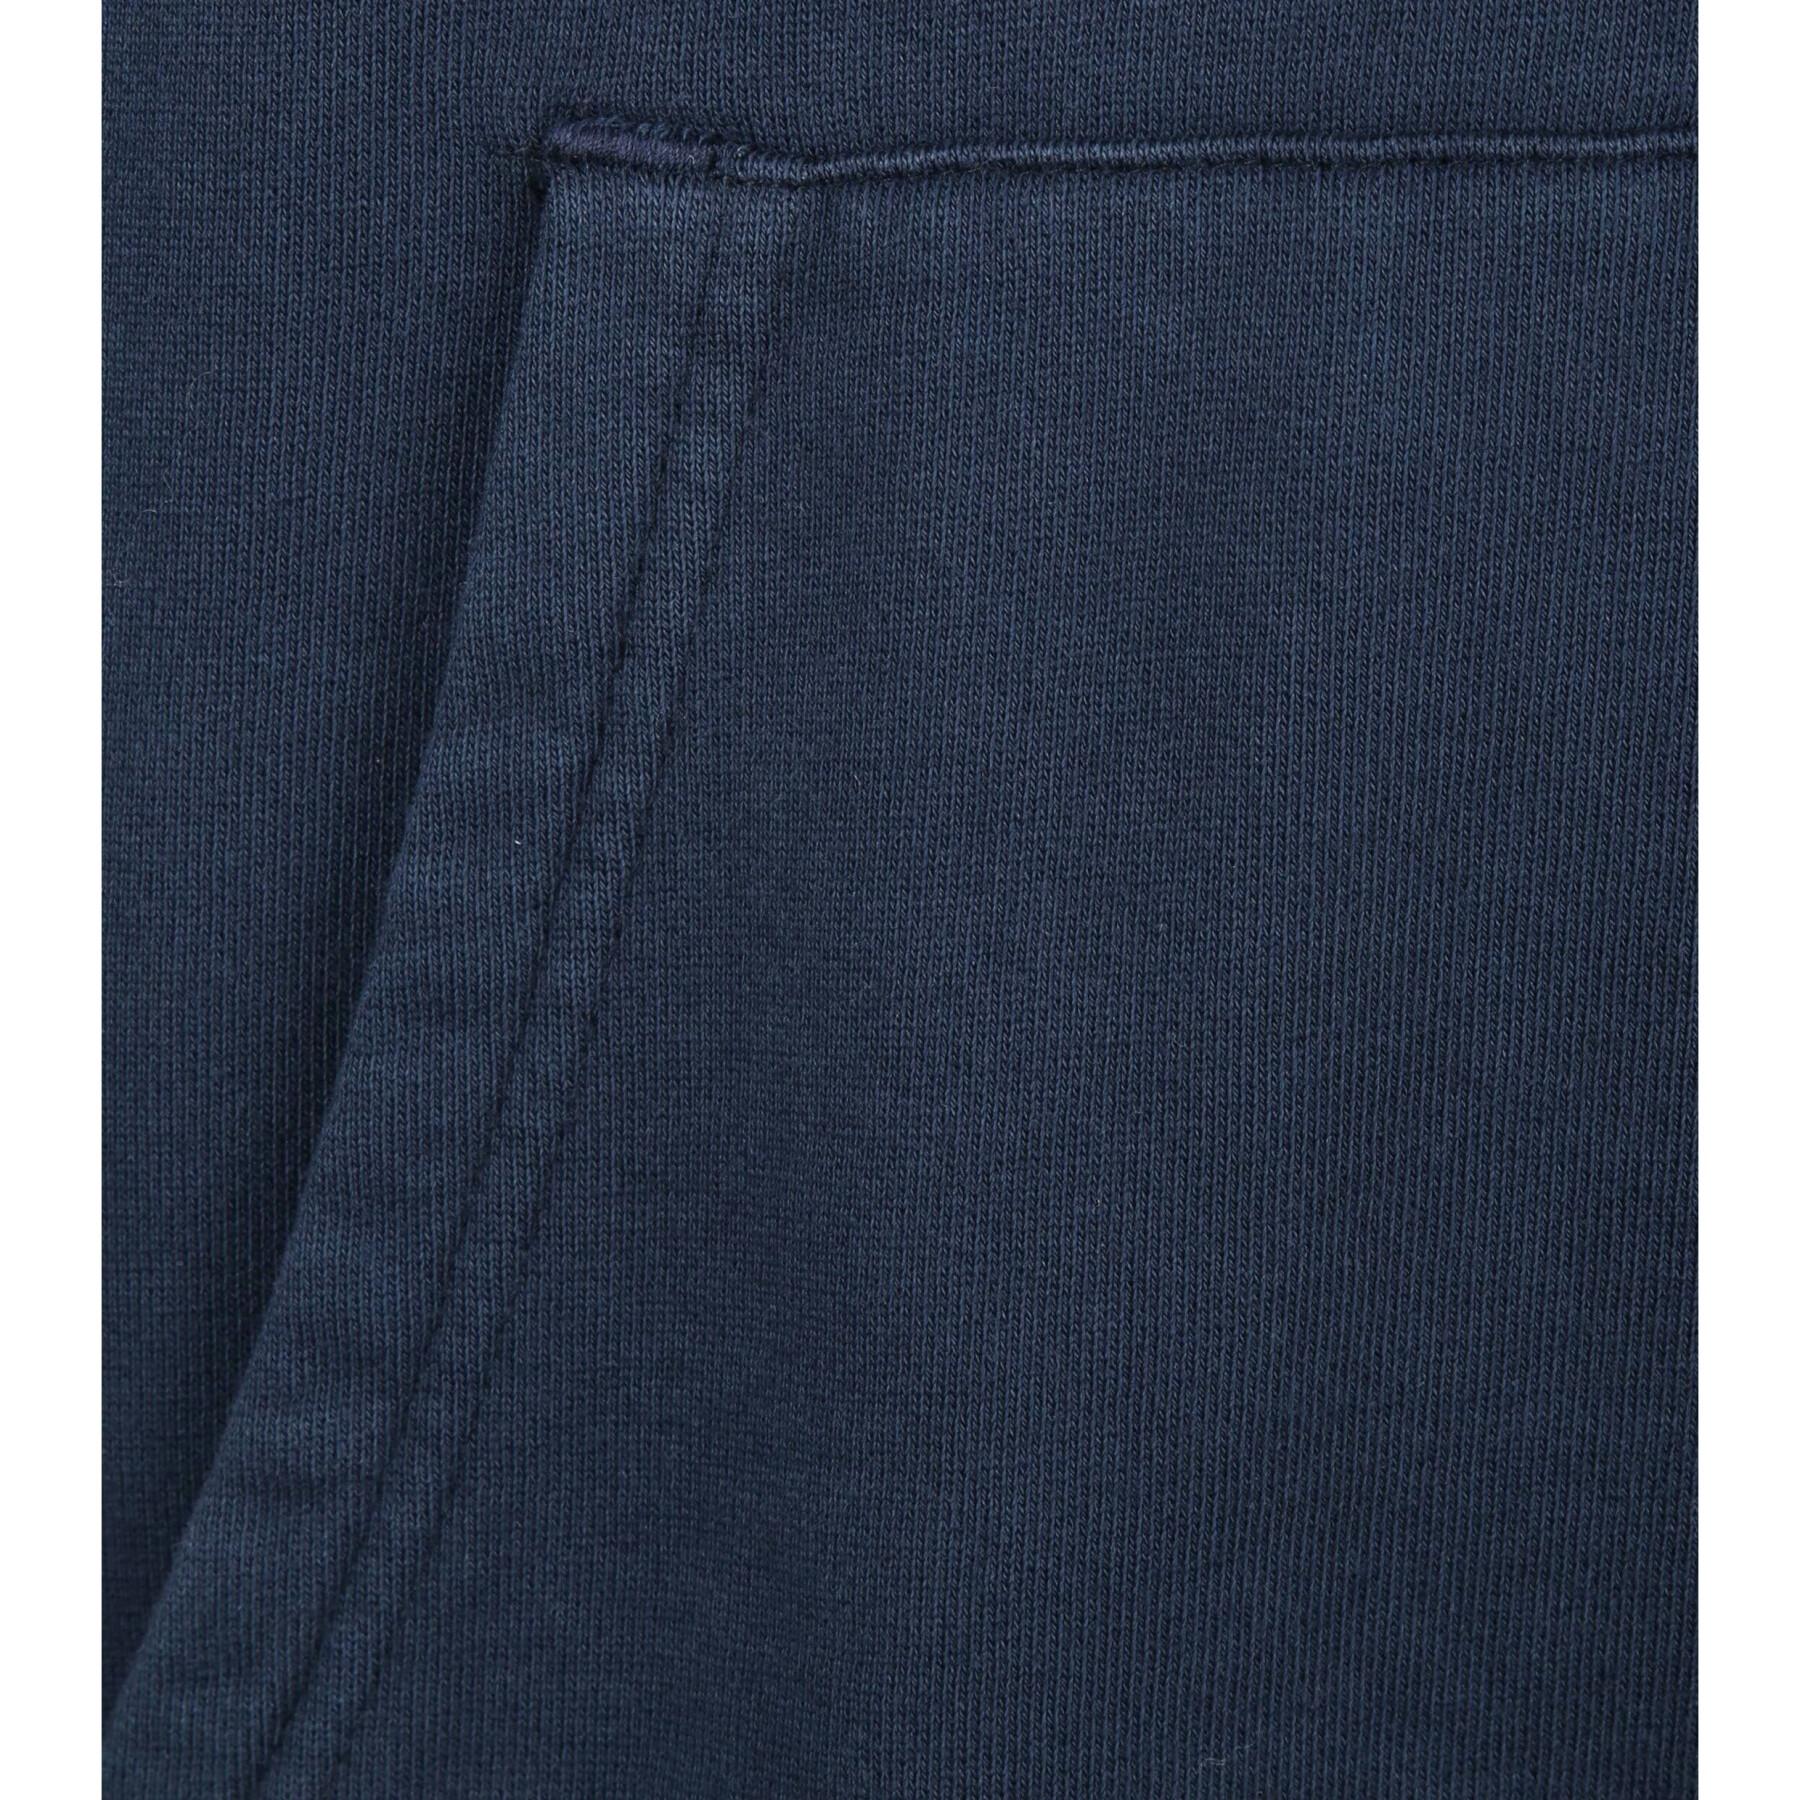 Sweatshirt à capuche Colorful Standard Classic Organic navy blue